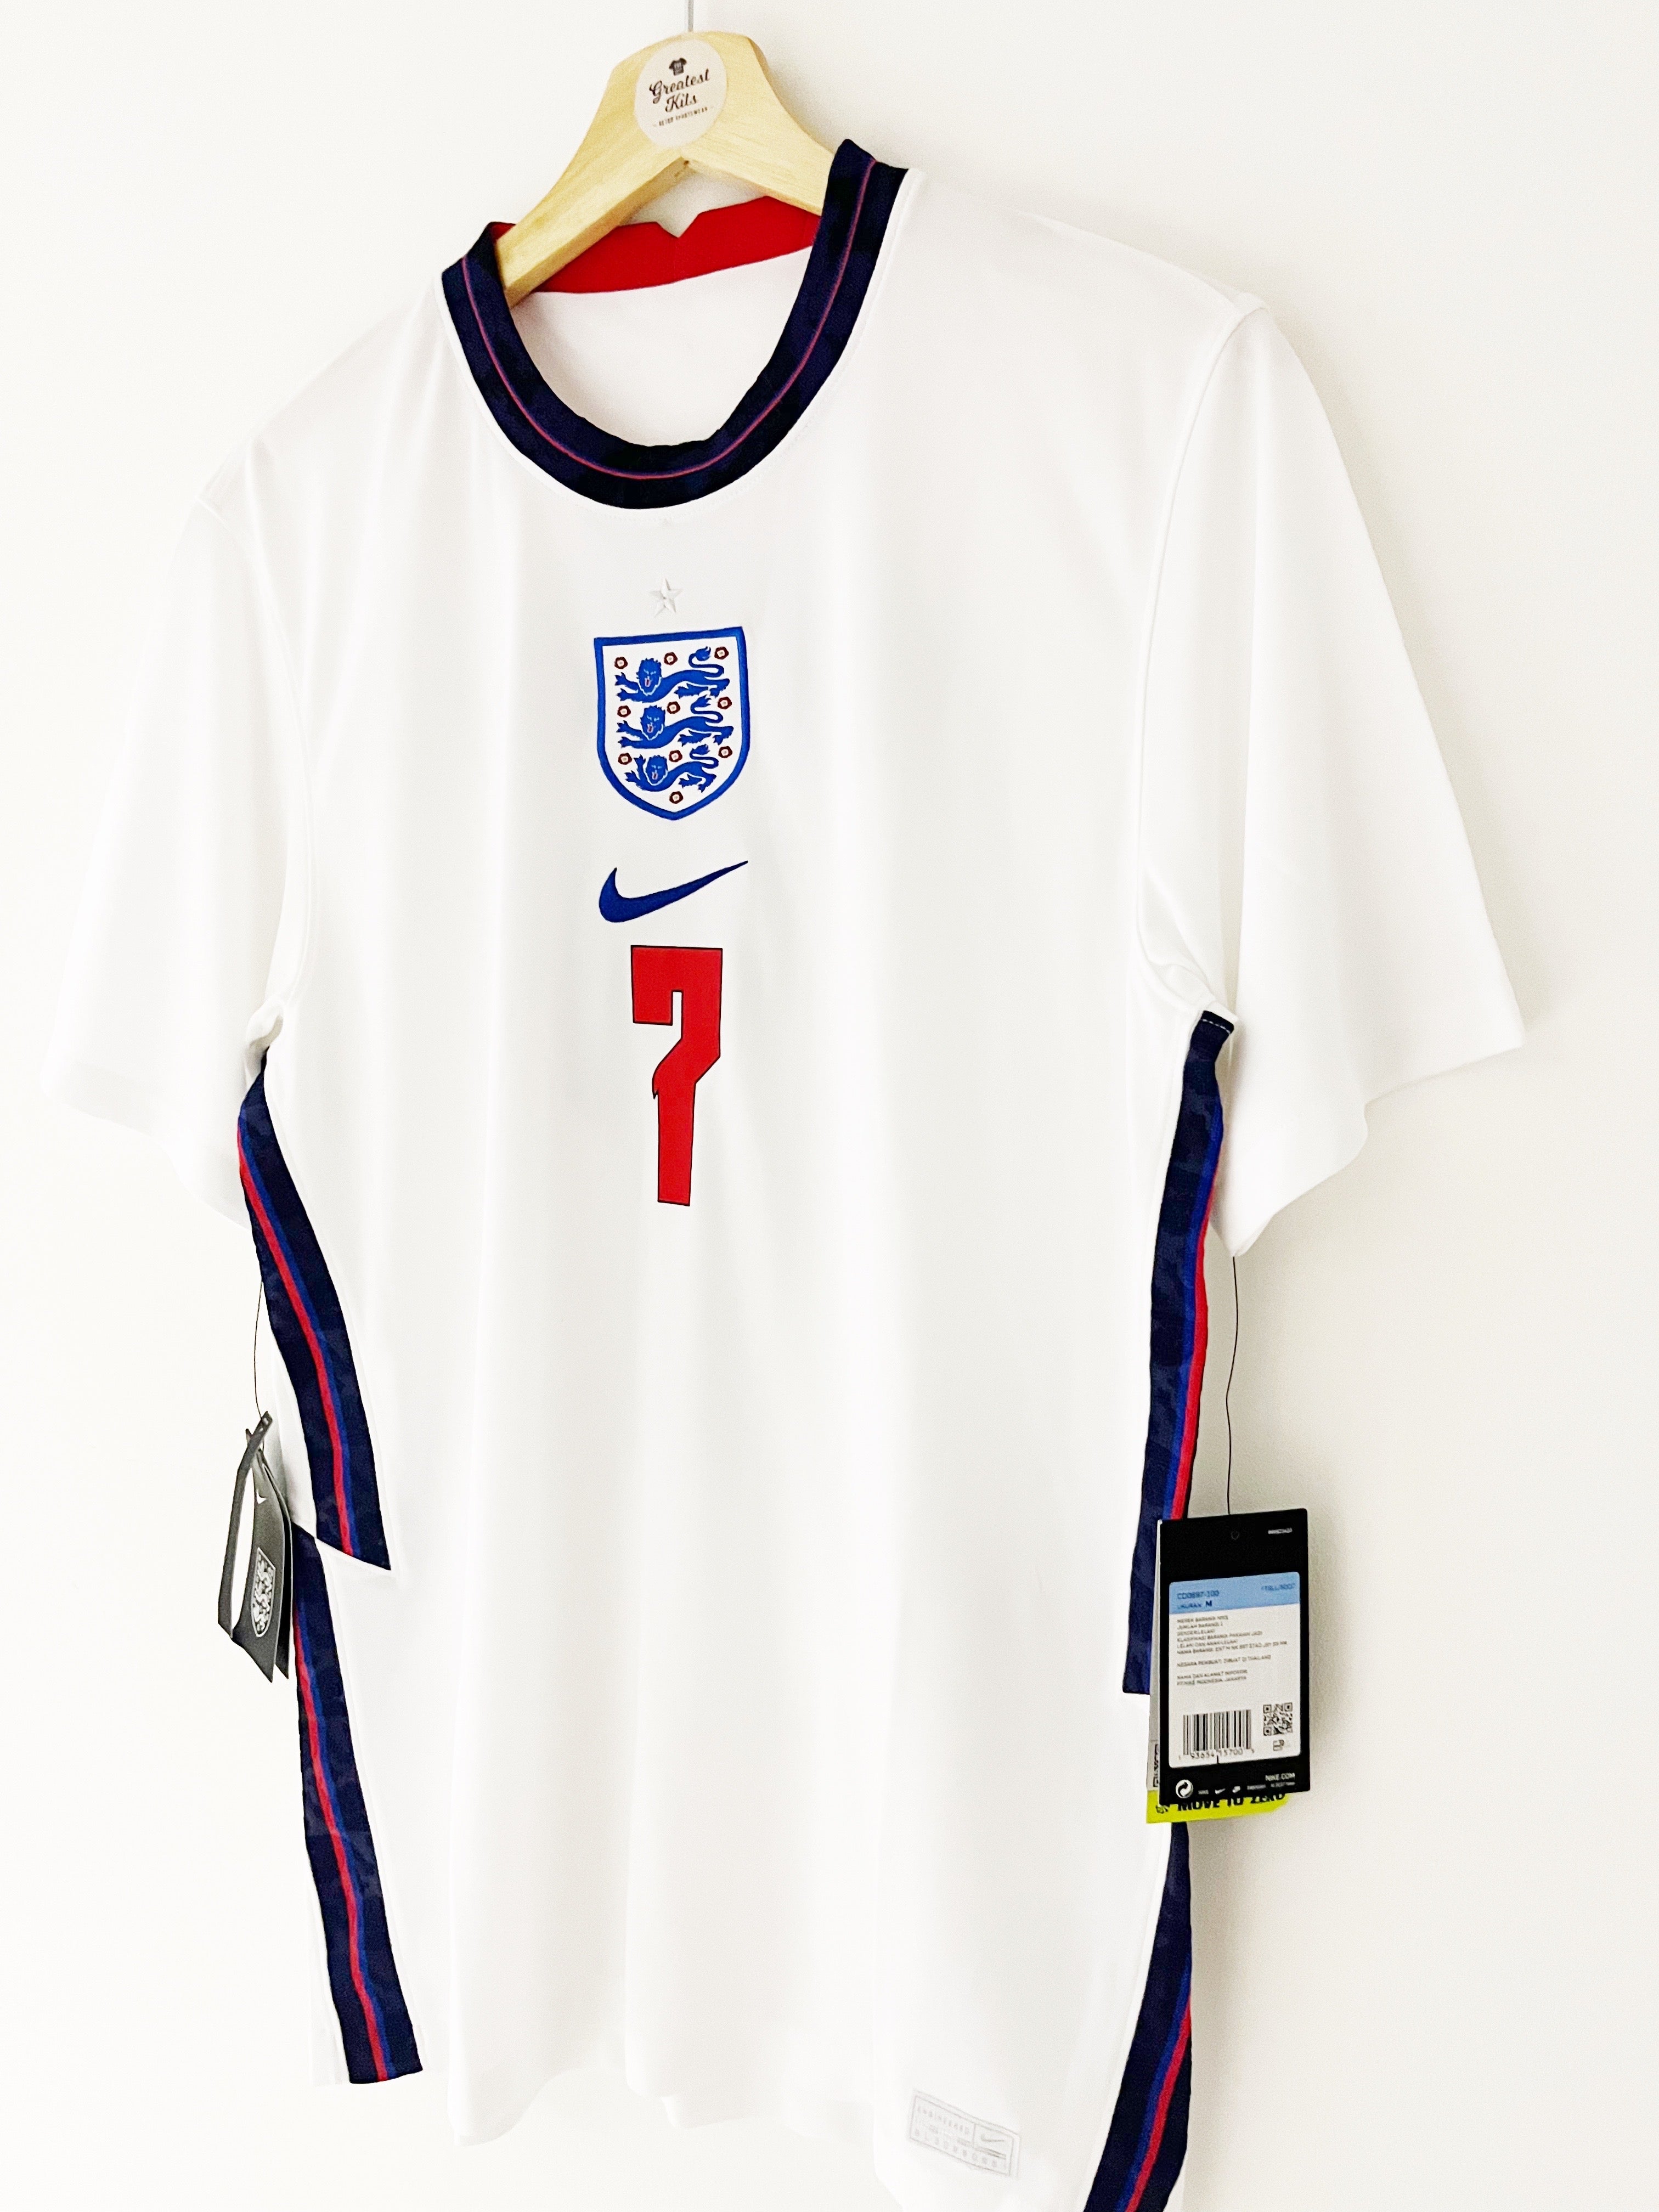 Camiseta de local de Inglaterra 2020/21 Grealish #7 (M) BNWT